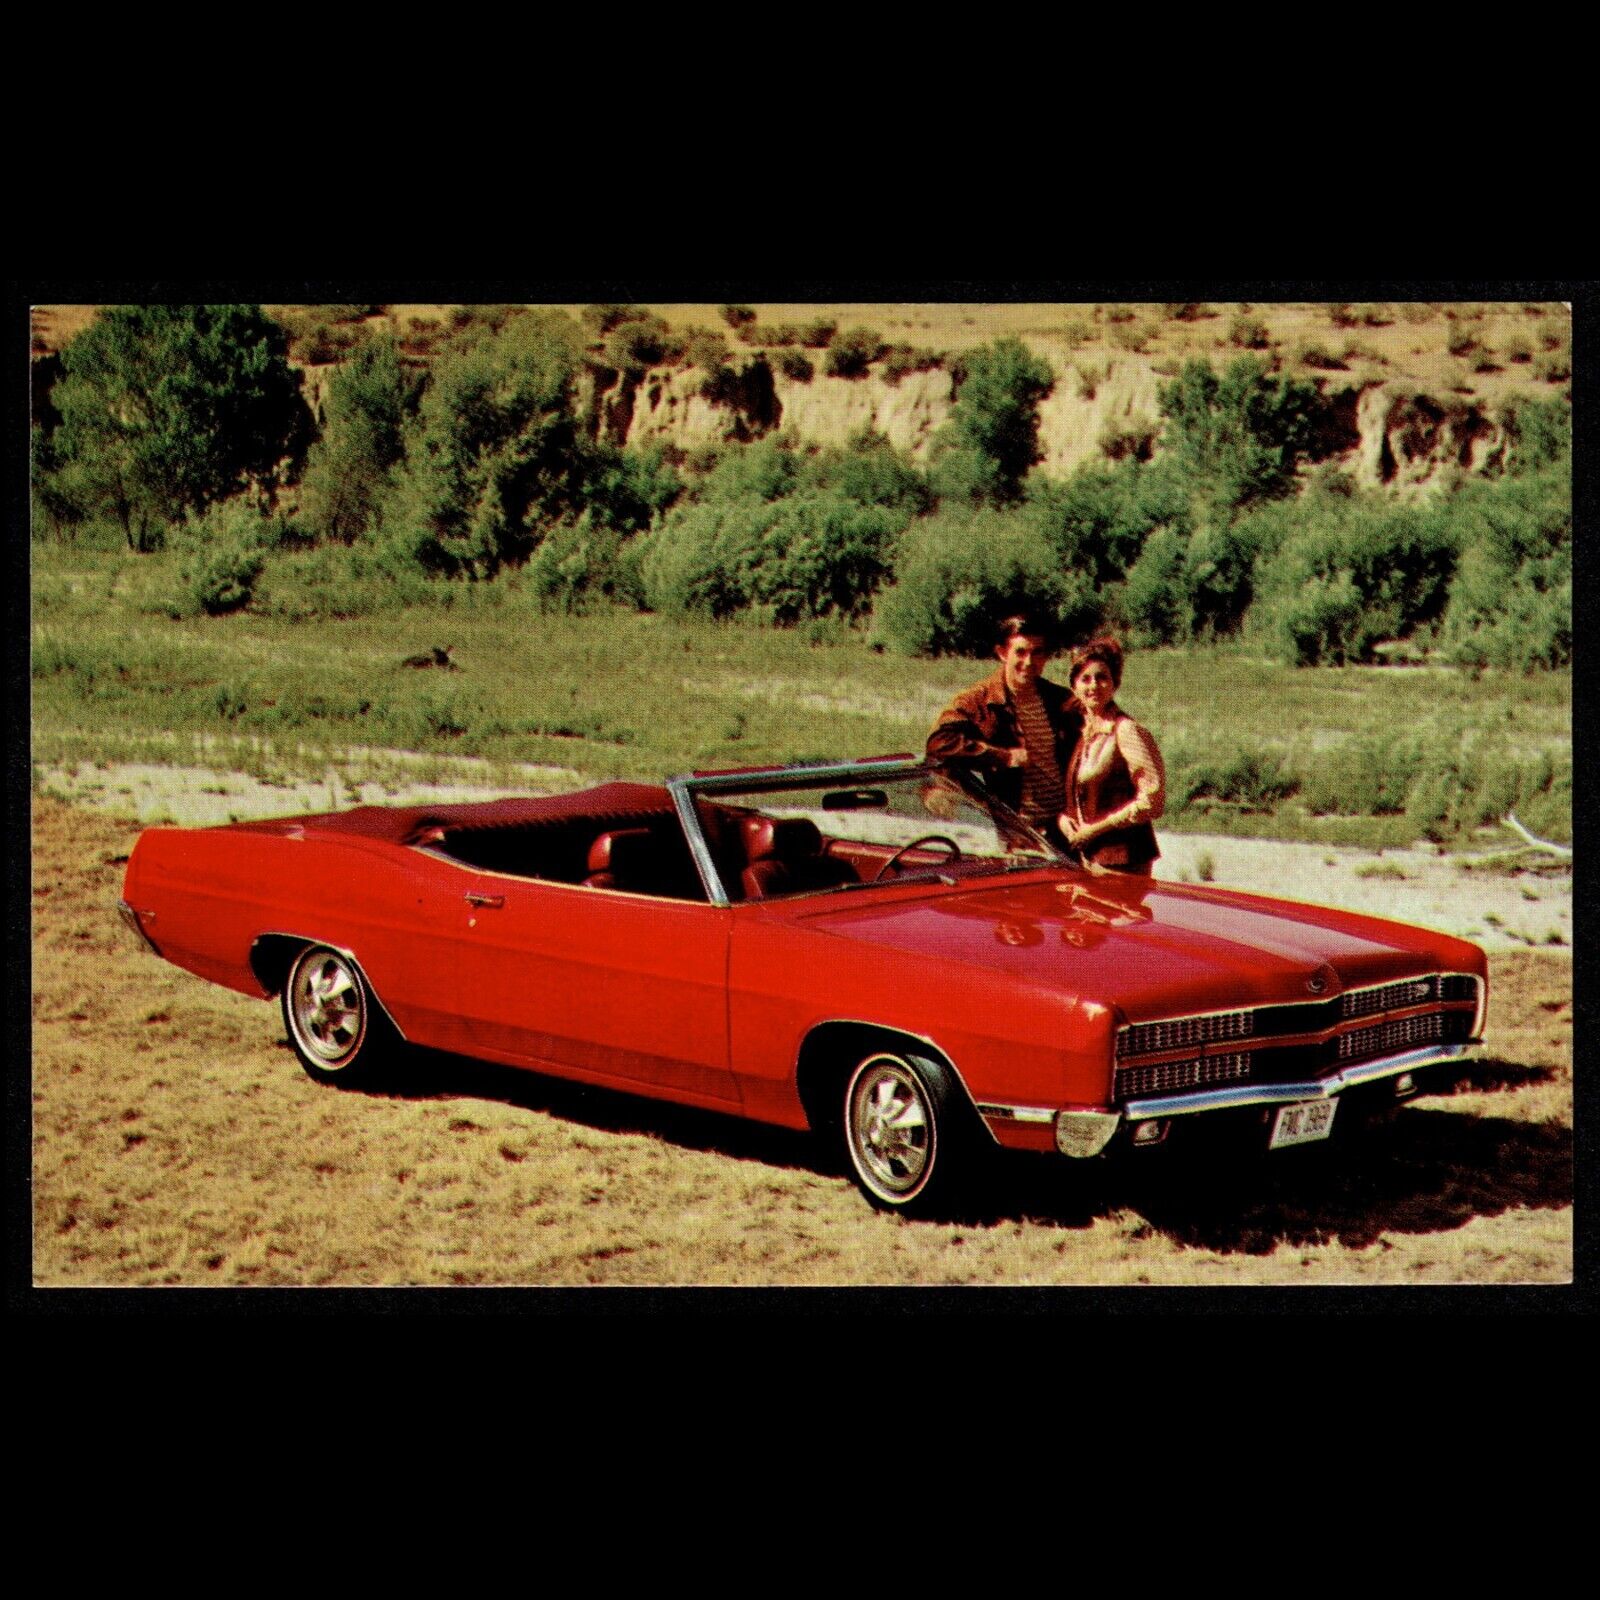 1969 Ford XL CONVERTIBLE: Original Dealer Promotional Postcard UNUSED VG+/Ex